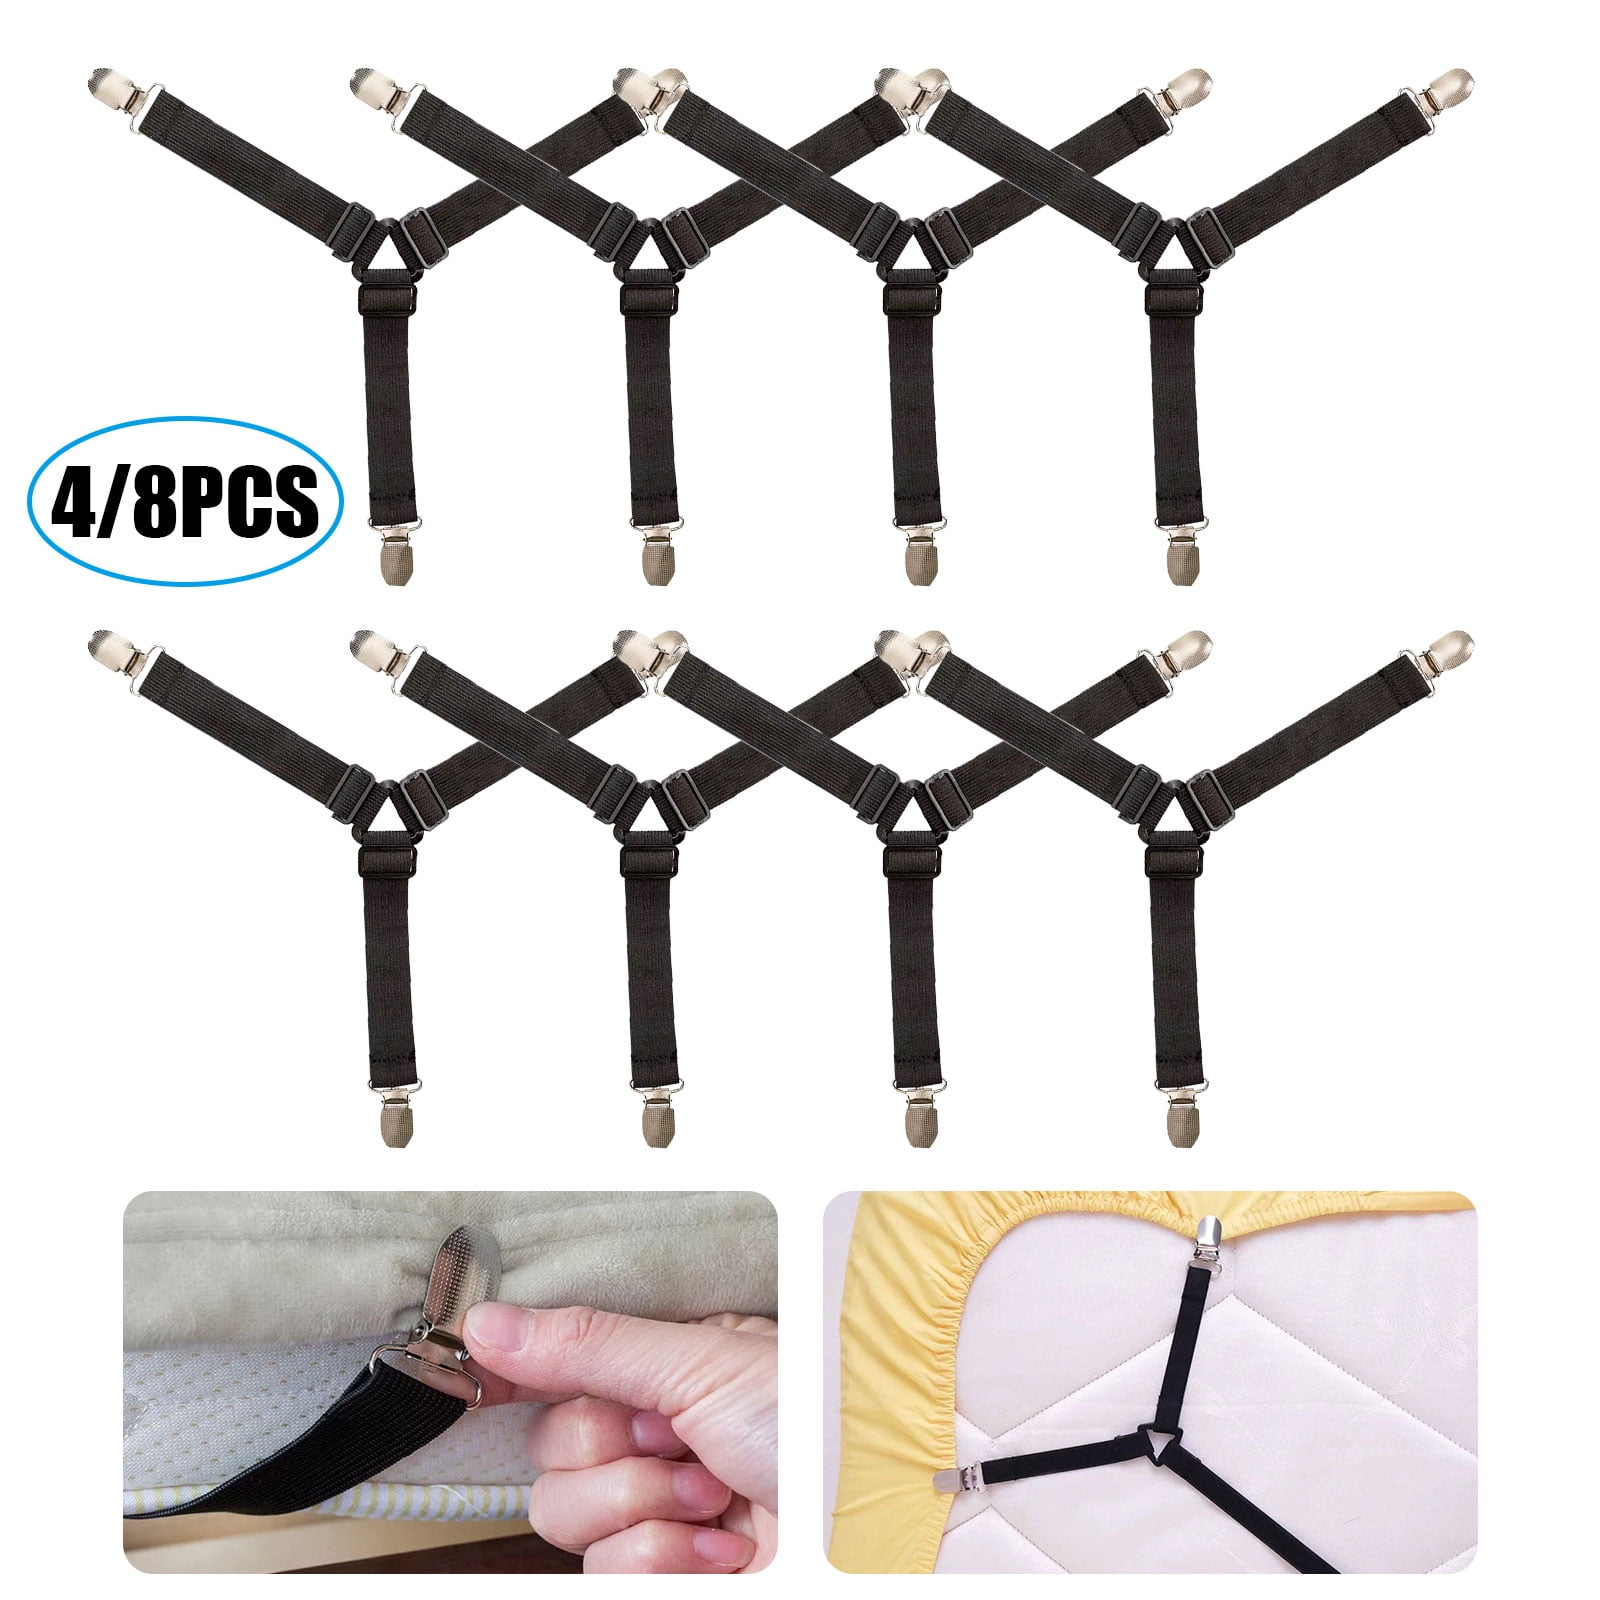 MISOWN Triangle Bed Sheet Mattress Holder Adjustable Elastic Sheet Fastener Grippers Clips Suspender Straps 4pcs